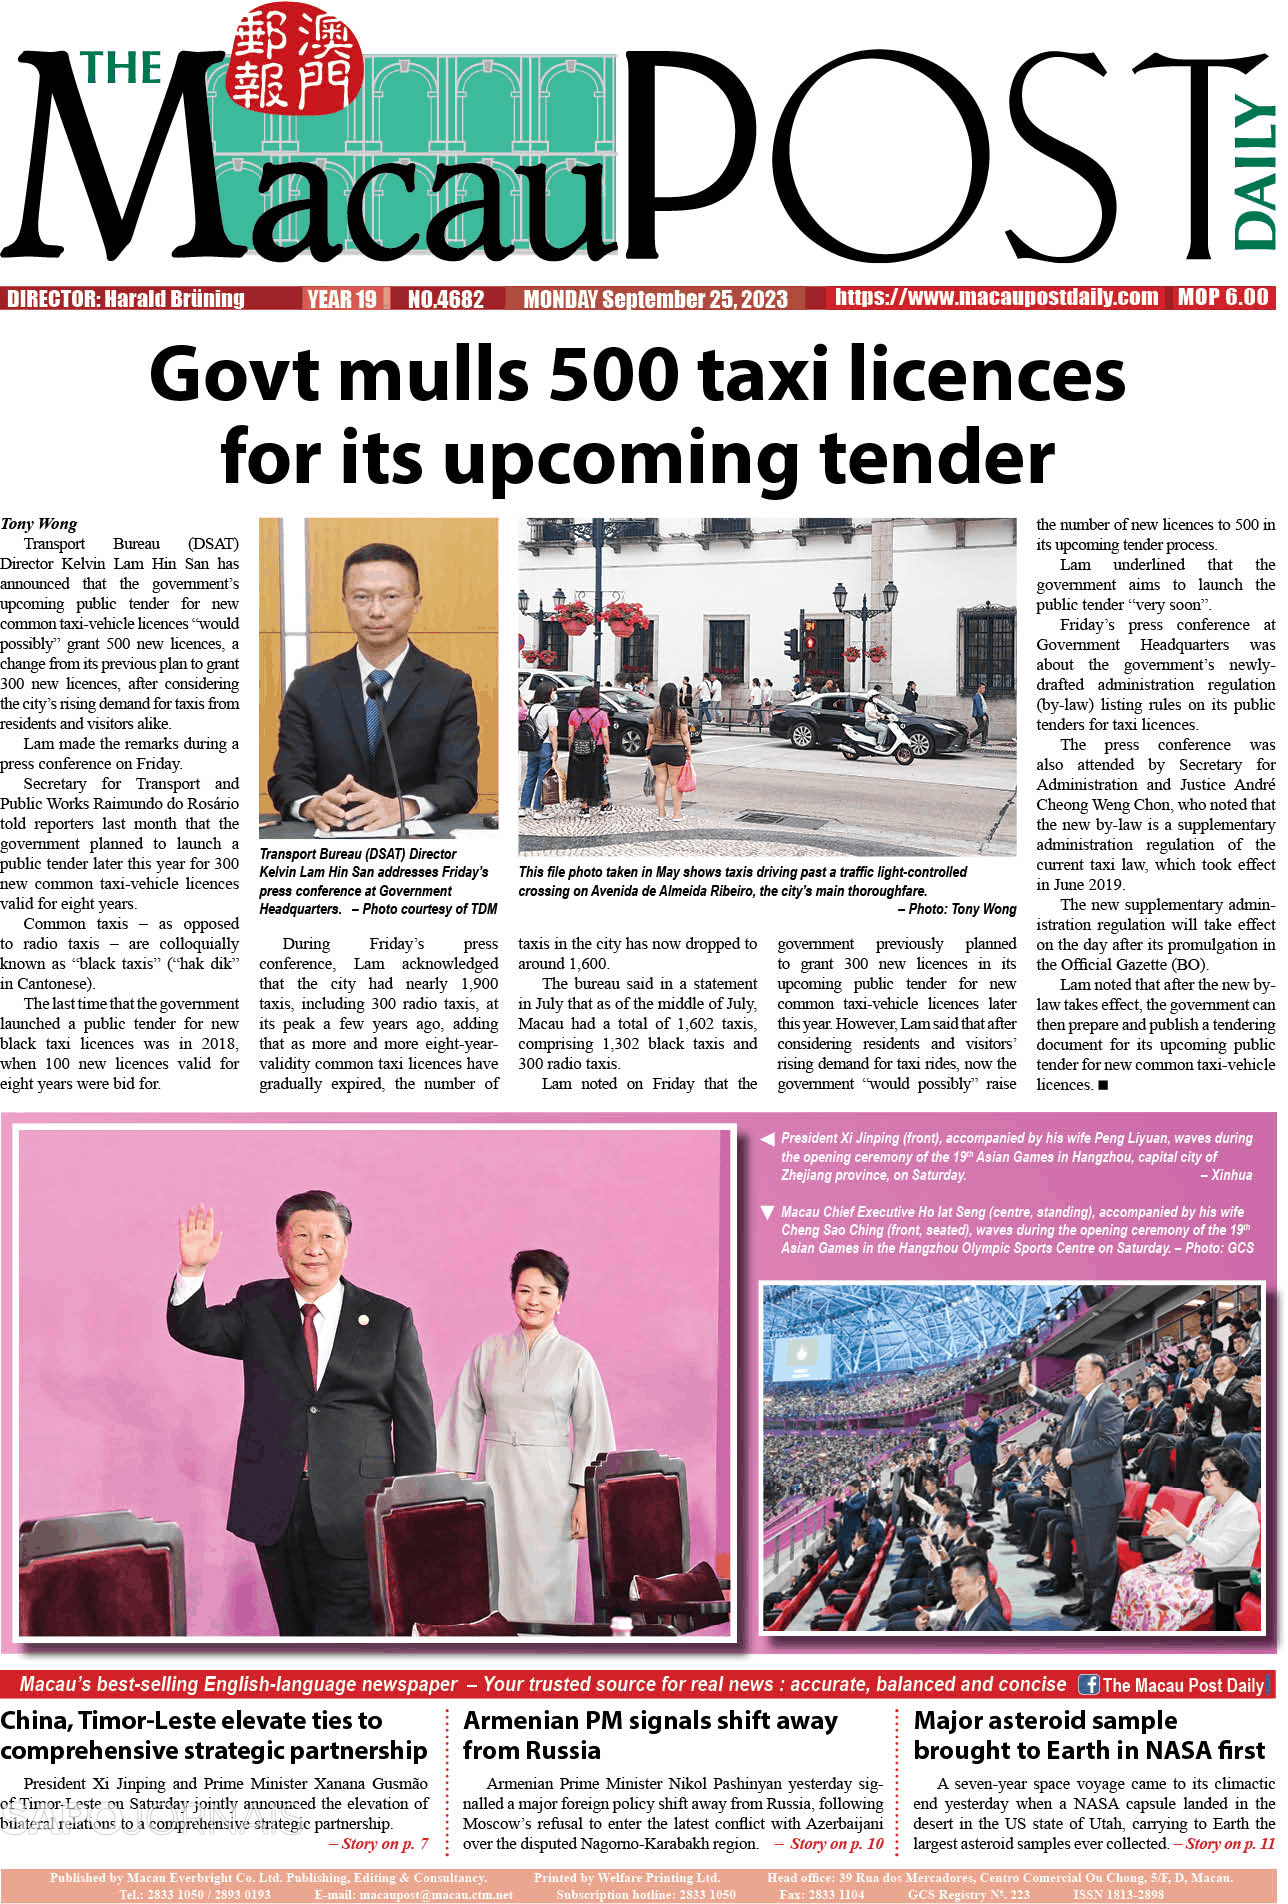 The Macau Post Daily